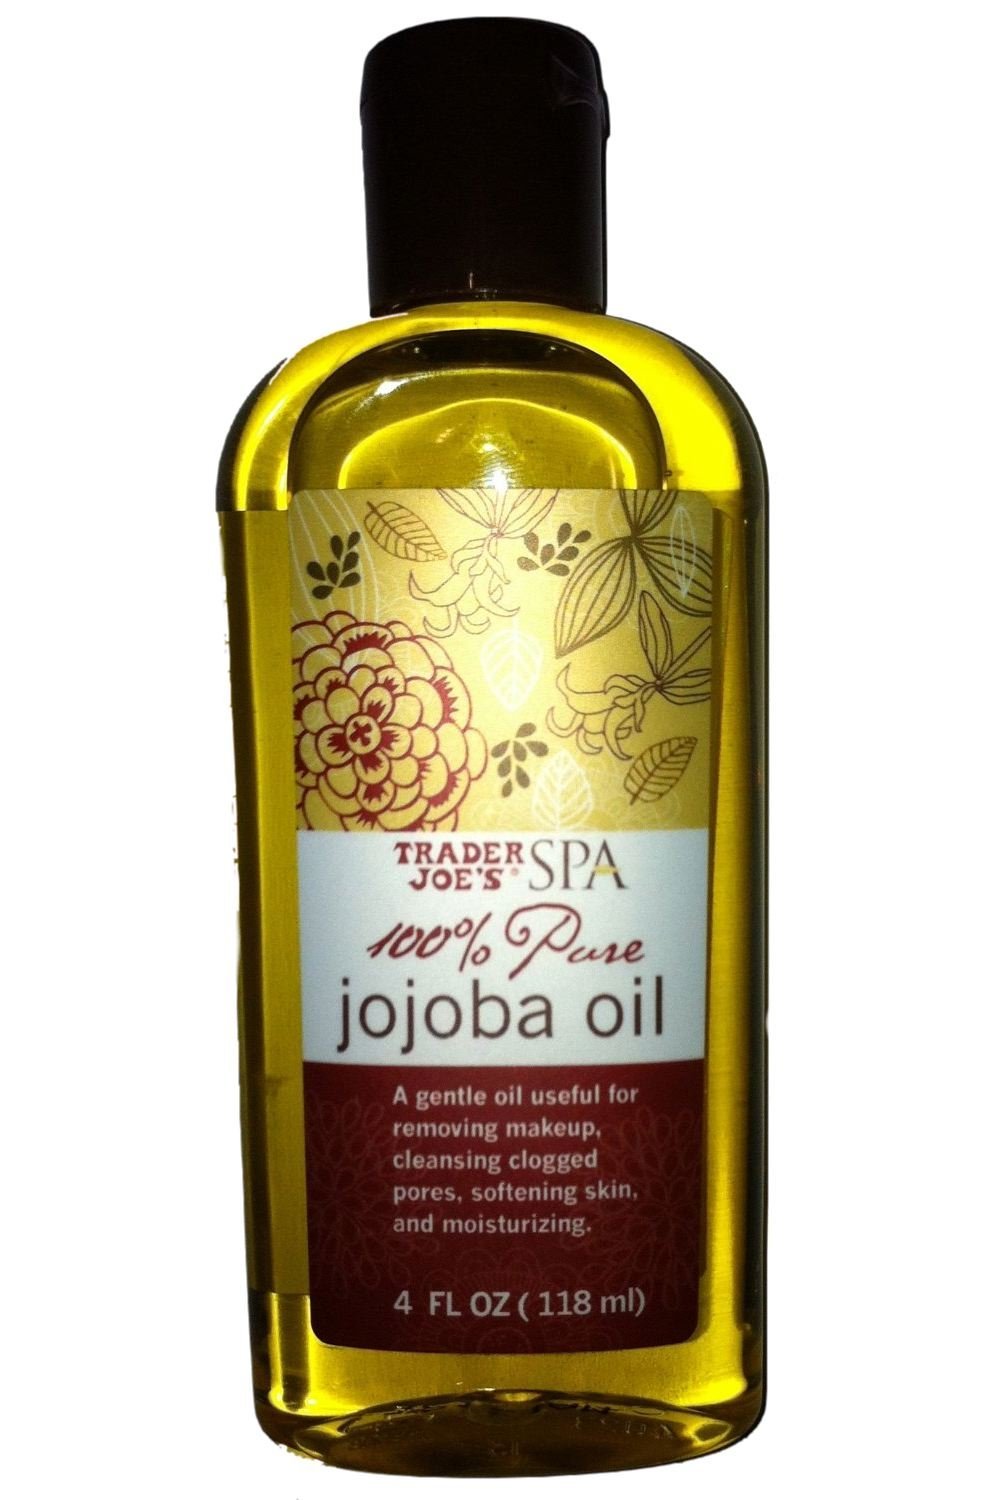 jojoba oil